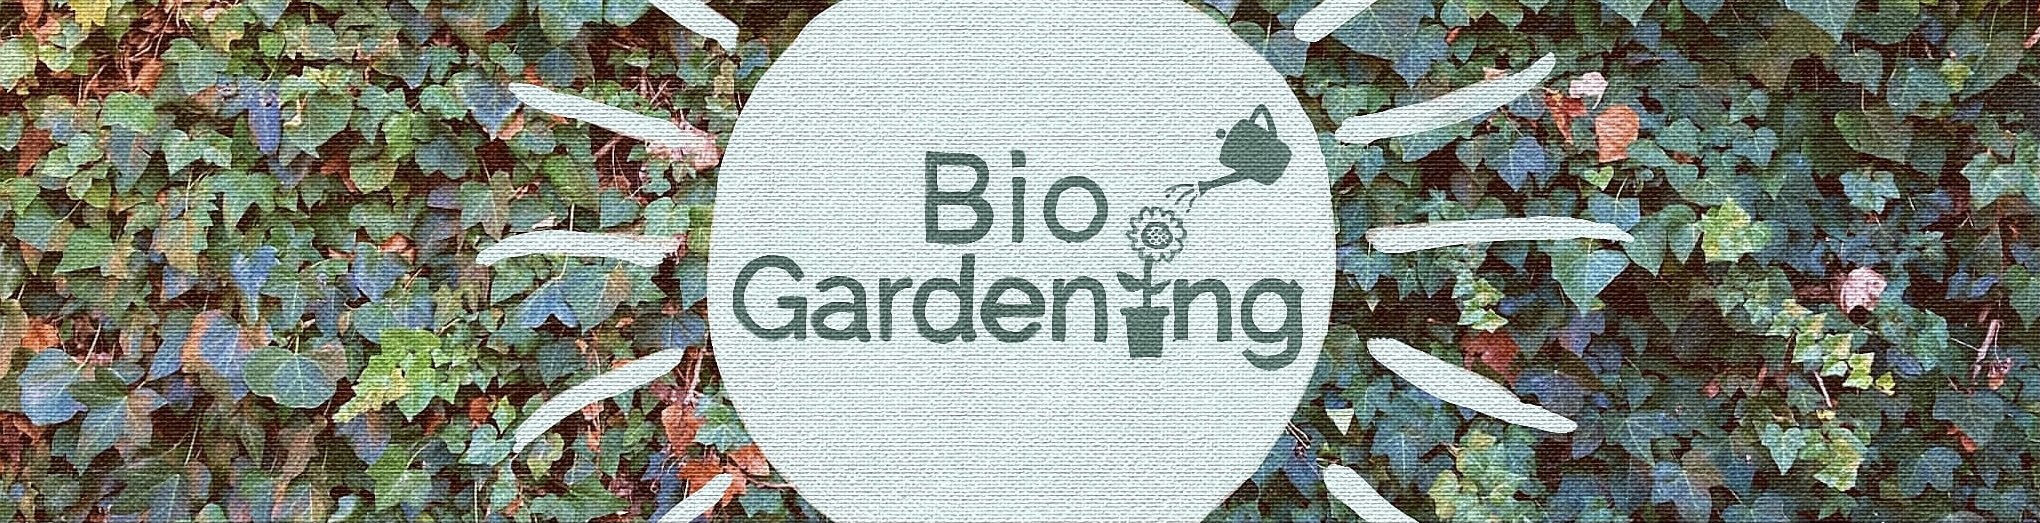 Bio Gardening